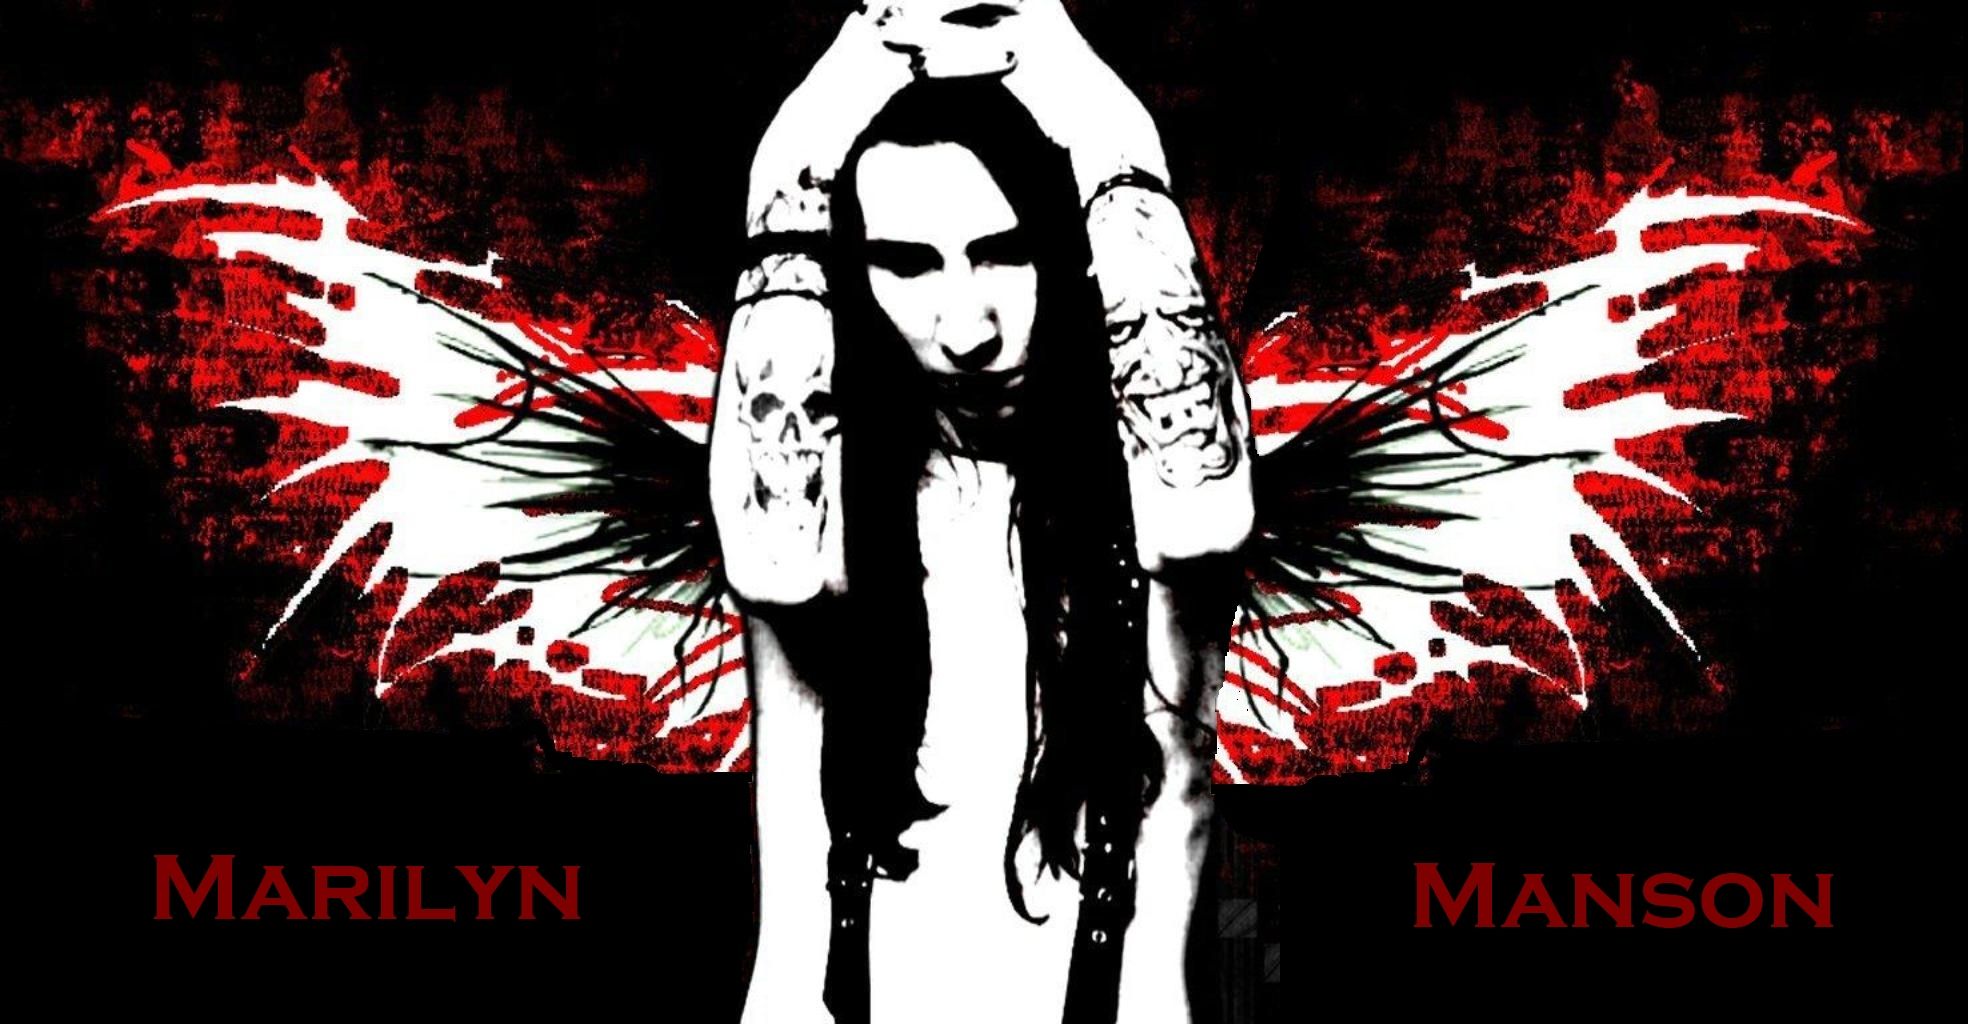 HD Quality Marilyn Manson Band Wallpaper Desktop 7 Celebrity